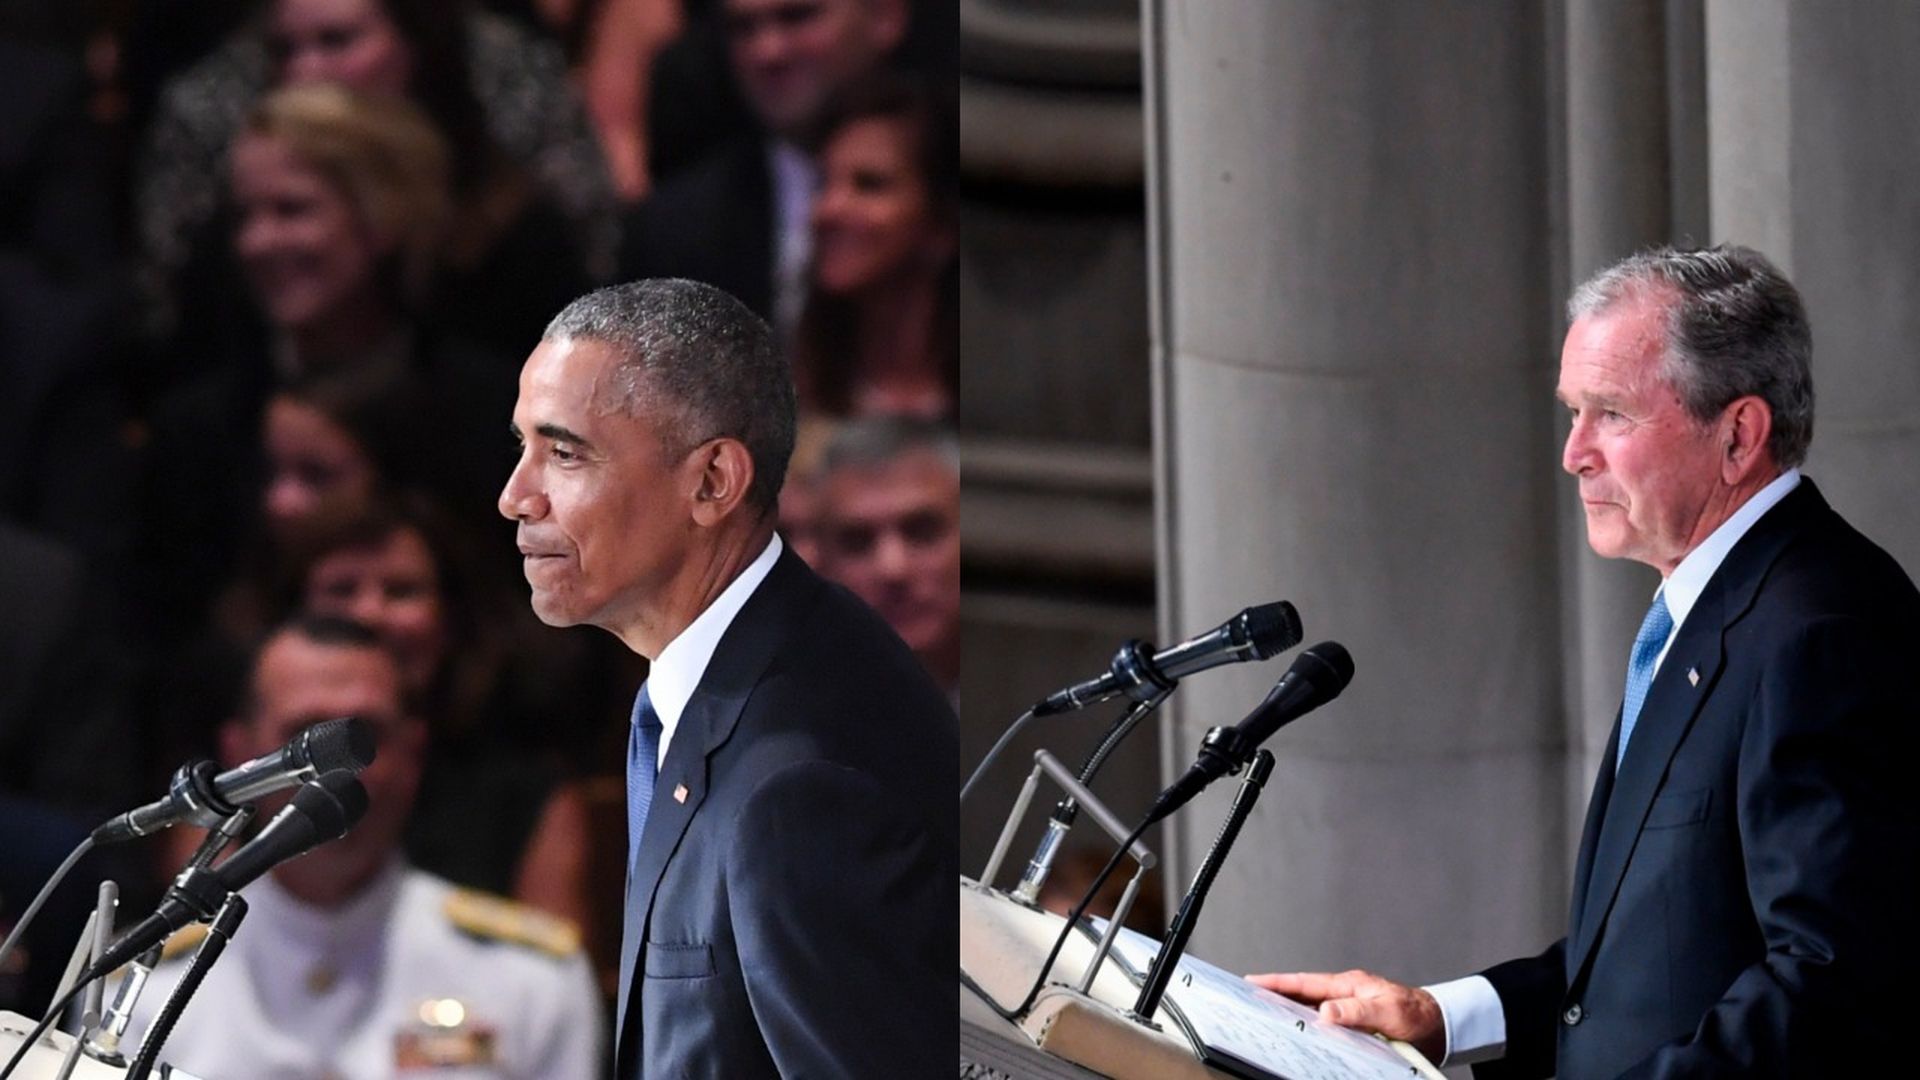 Presidents Bush and Obama speaking at the podium.